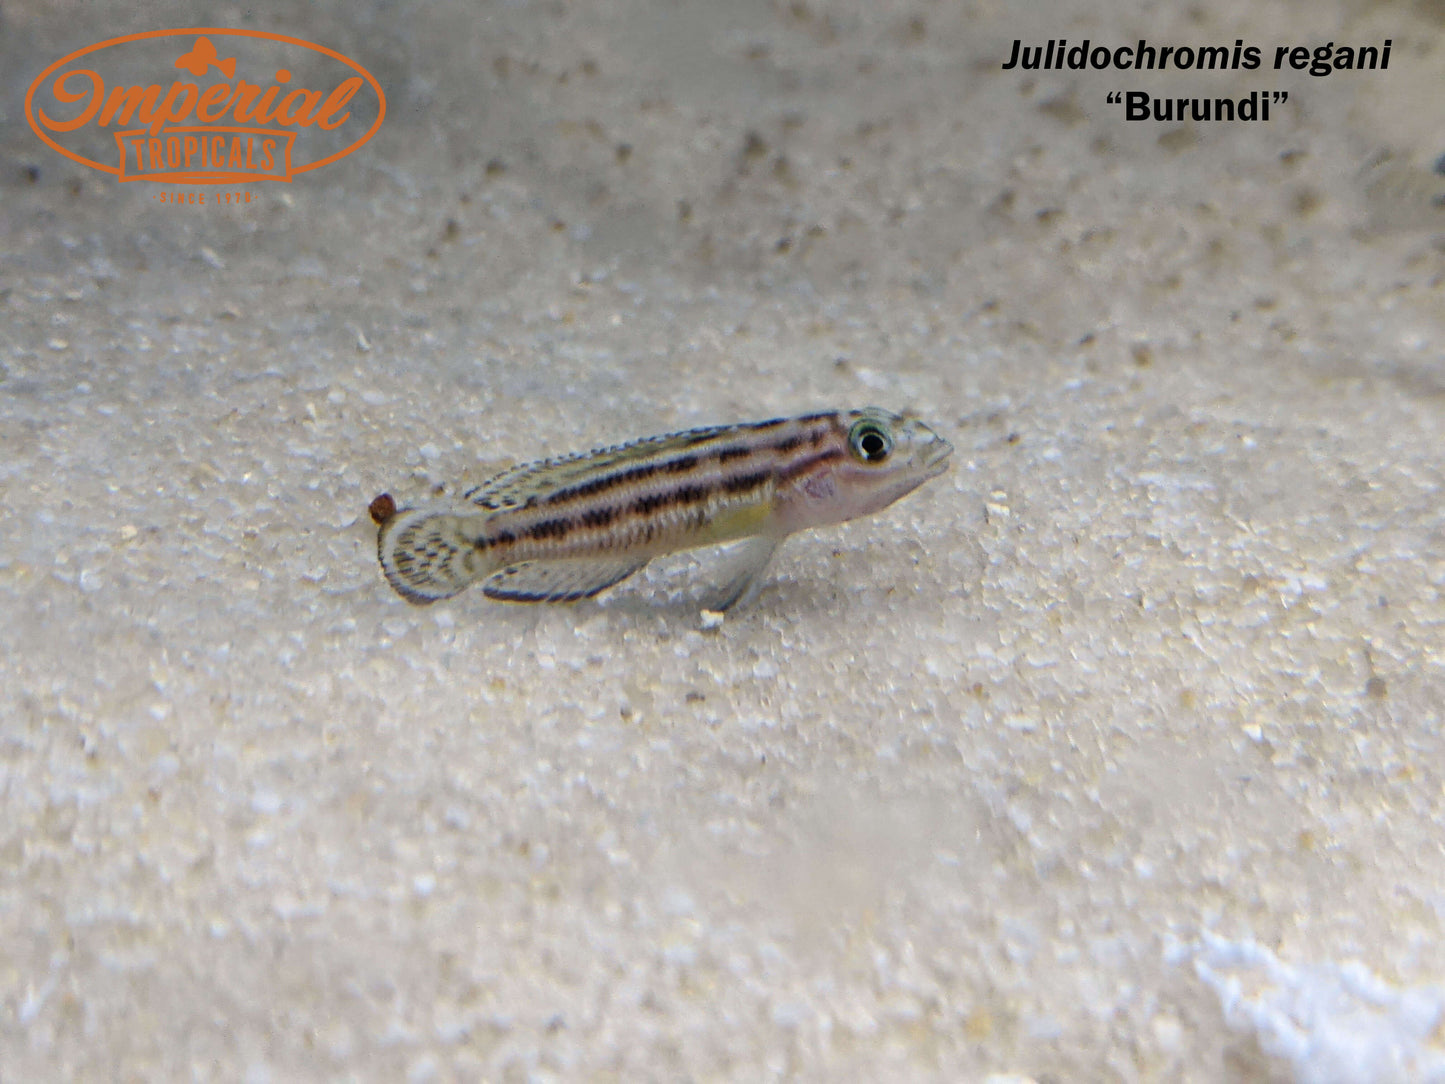 Julidochromis regani "Burundi"